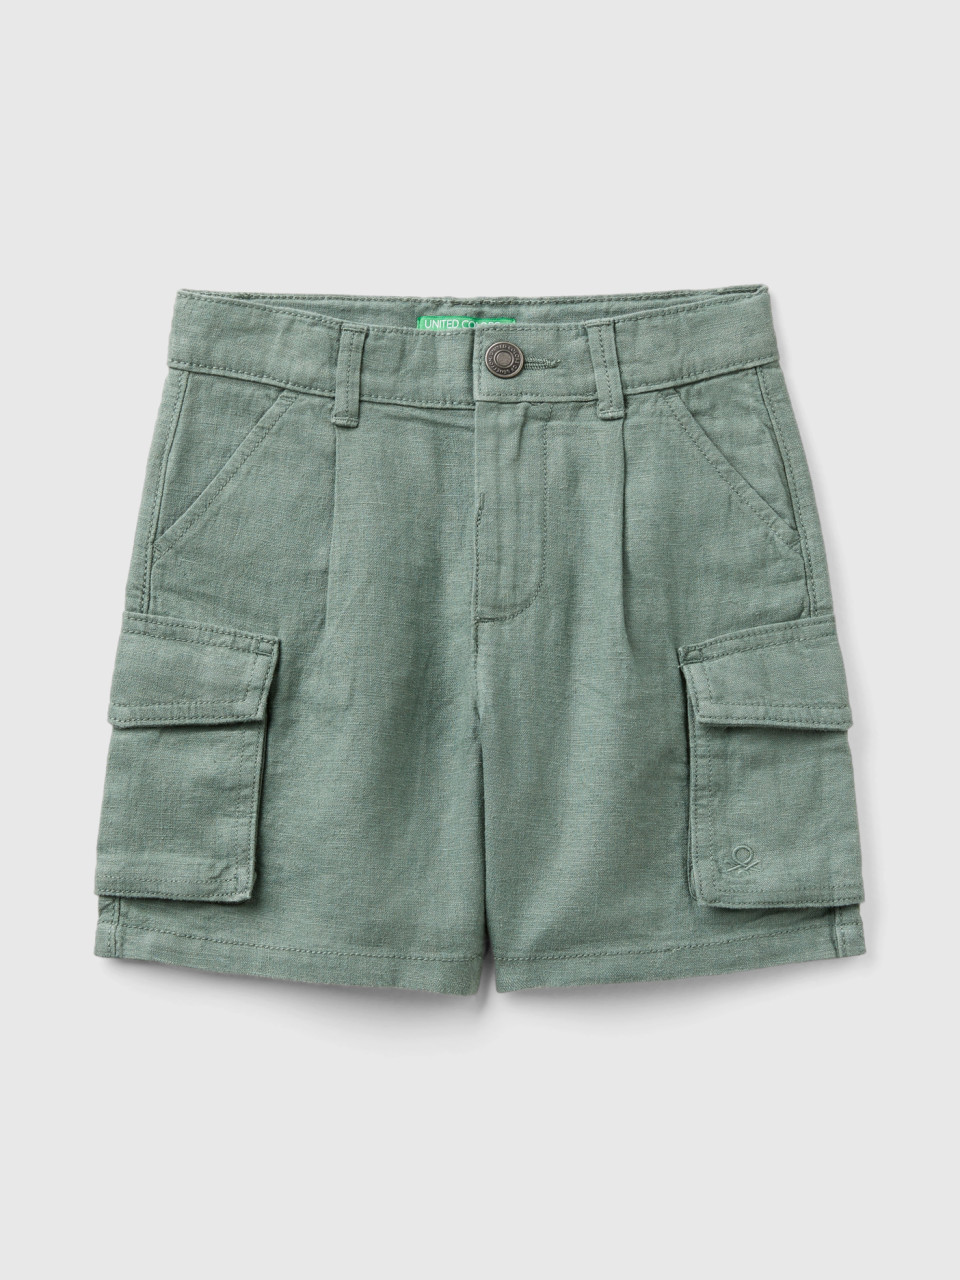 Benetton, Cargo Bermuda Shorts In Linen Blend, Military Green, Kids